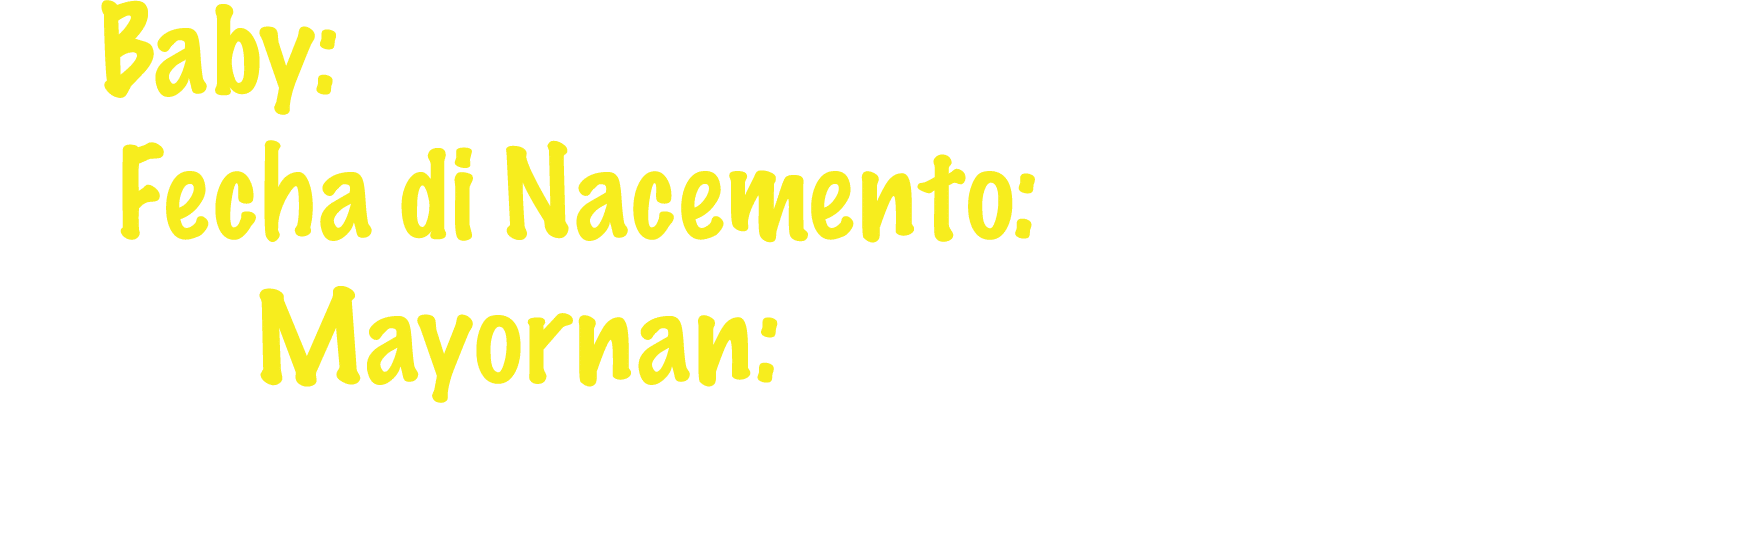 Baby: K iser Shane Sterling Richardson Fecha di Nacemento: 28 maart 2022 Mayornan: Saminah de Cuba y Clifford Richardson